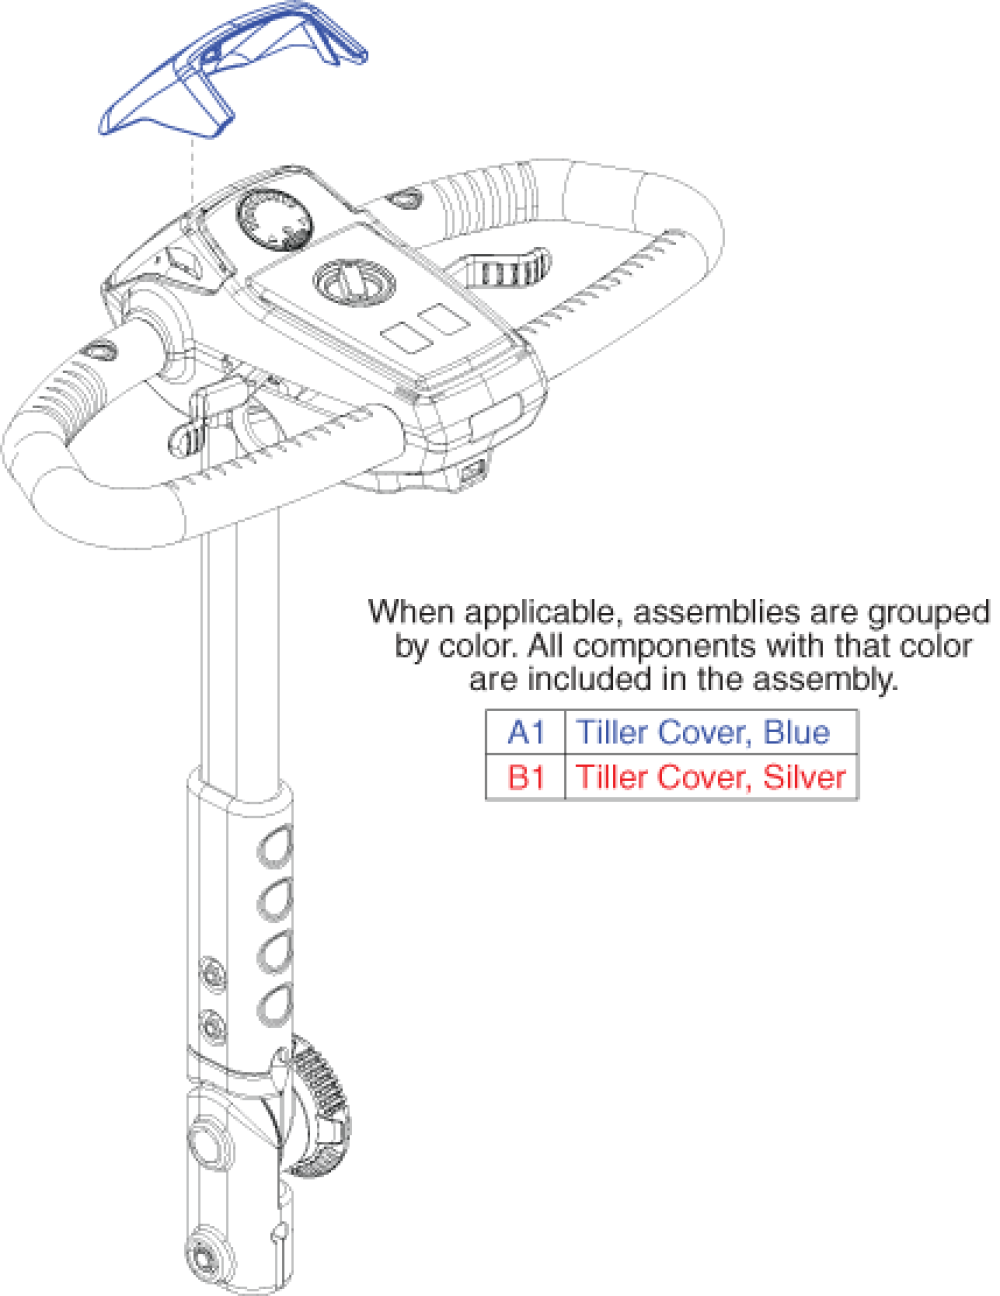 Tiller Cover parts diagram